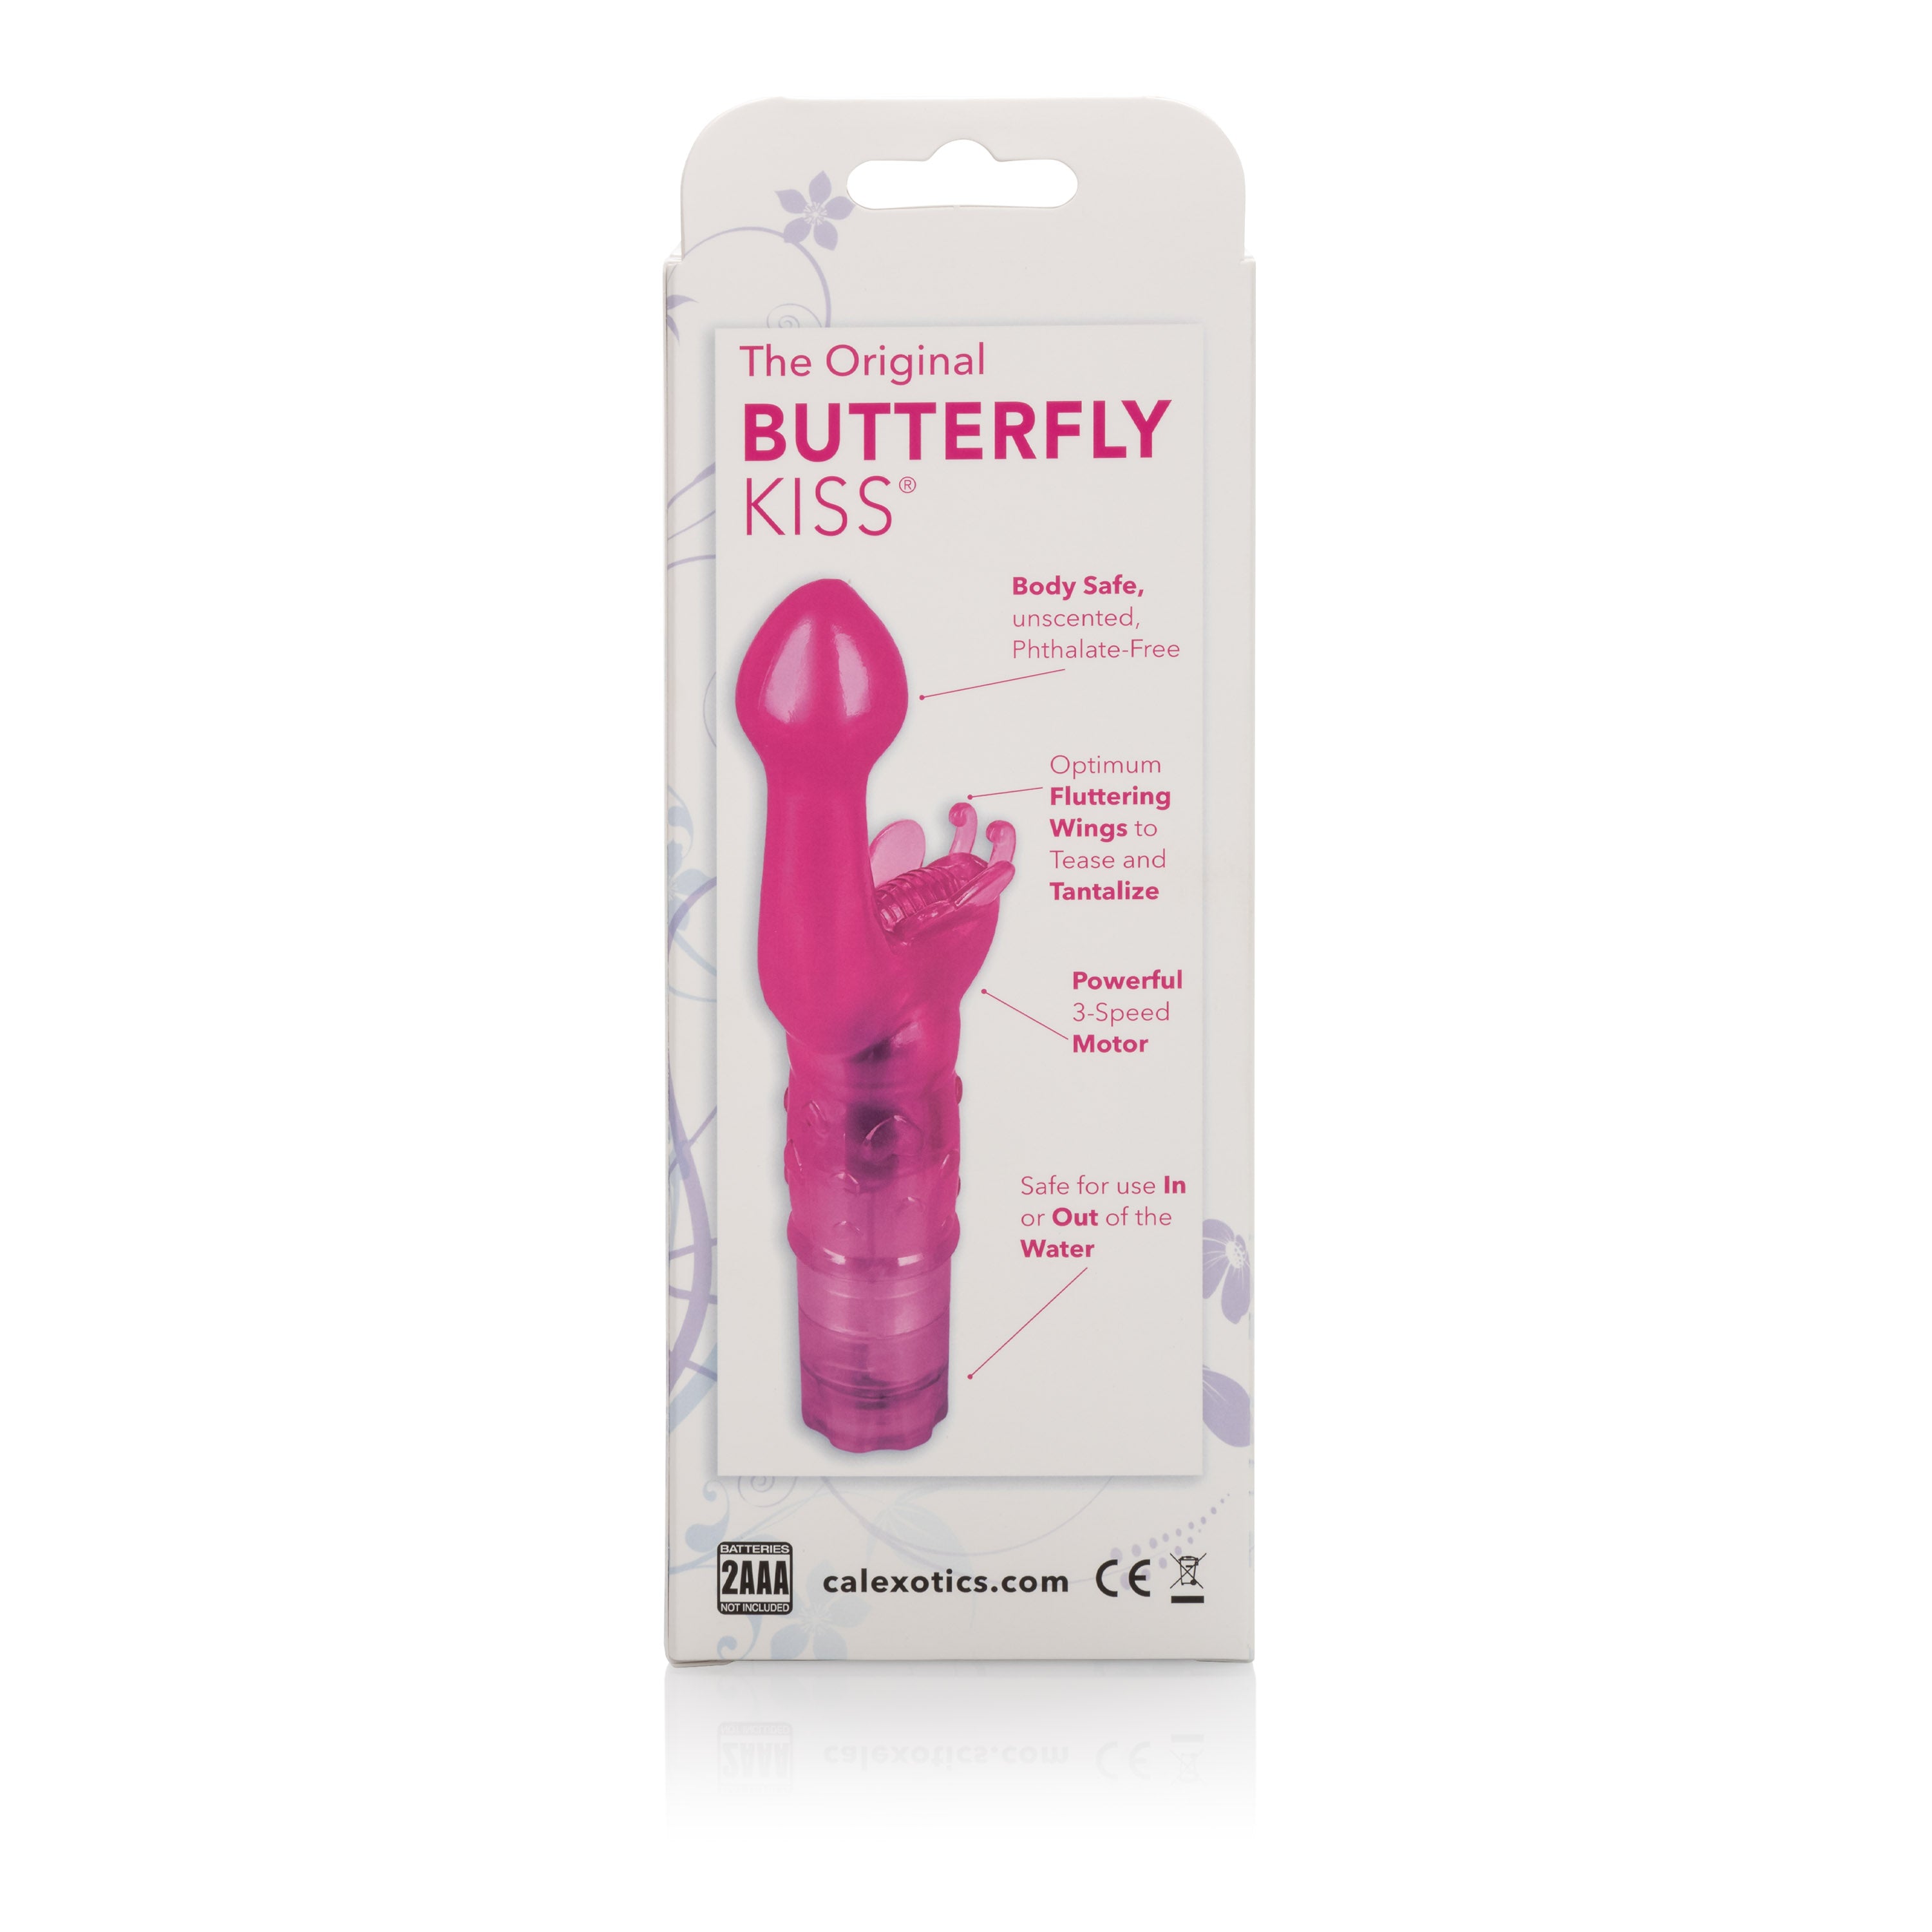 The Original Butterfly Kiss - Pink